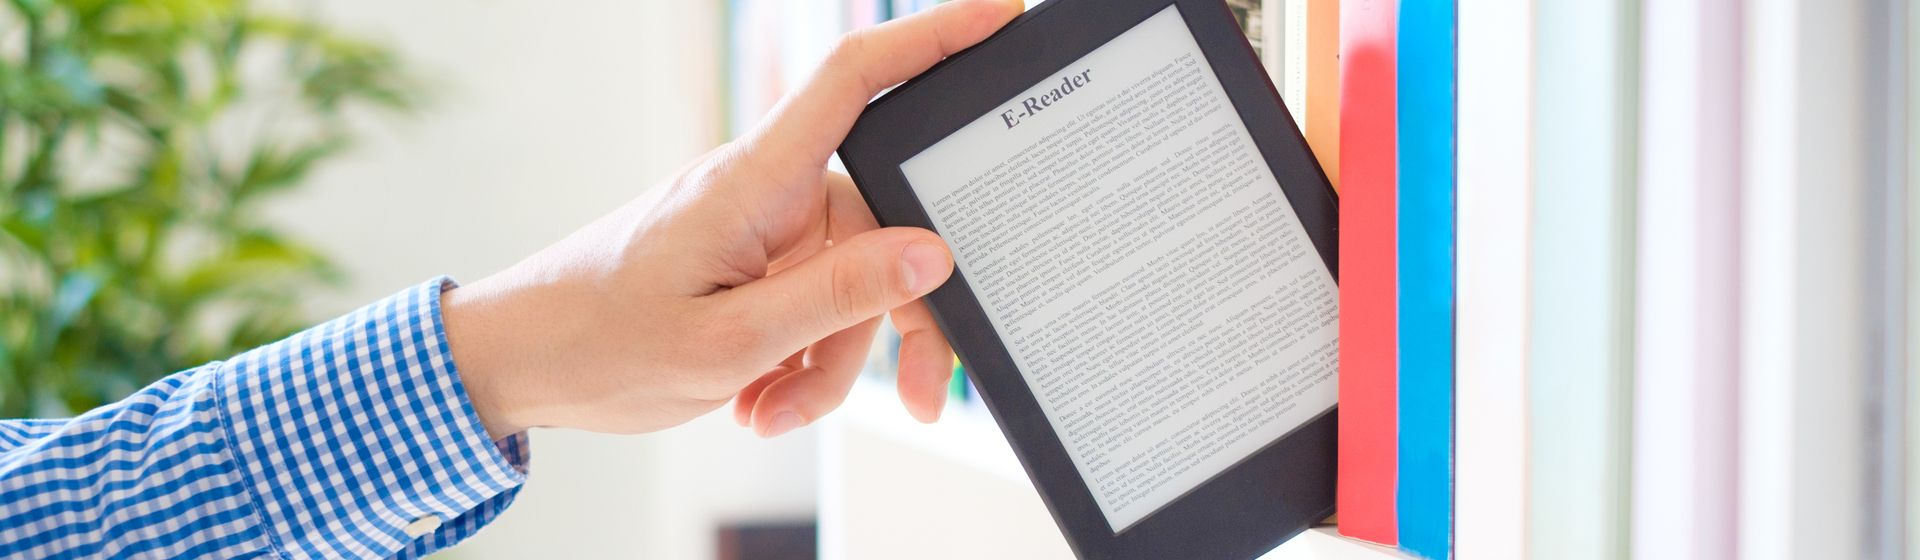 Kindle Unlimited vale a pena? Conheça o catálogo da Amazon